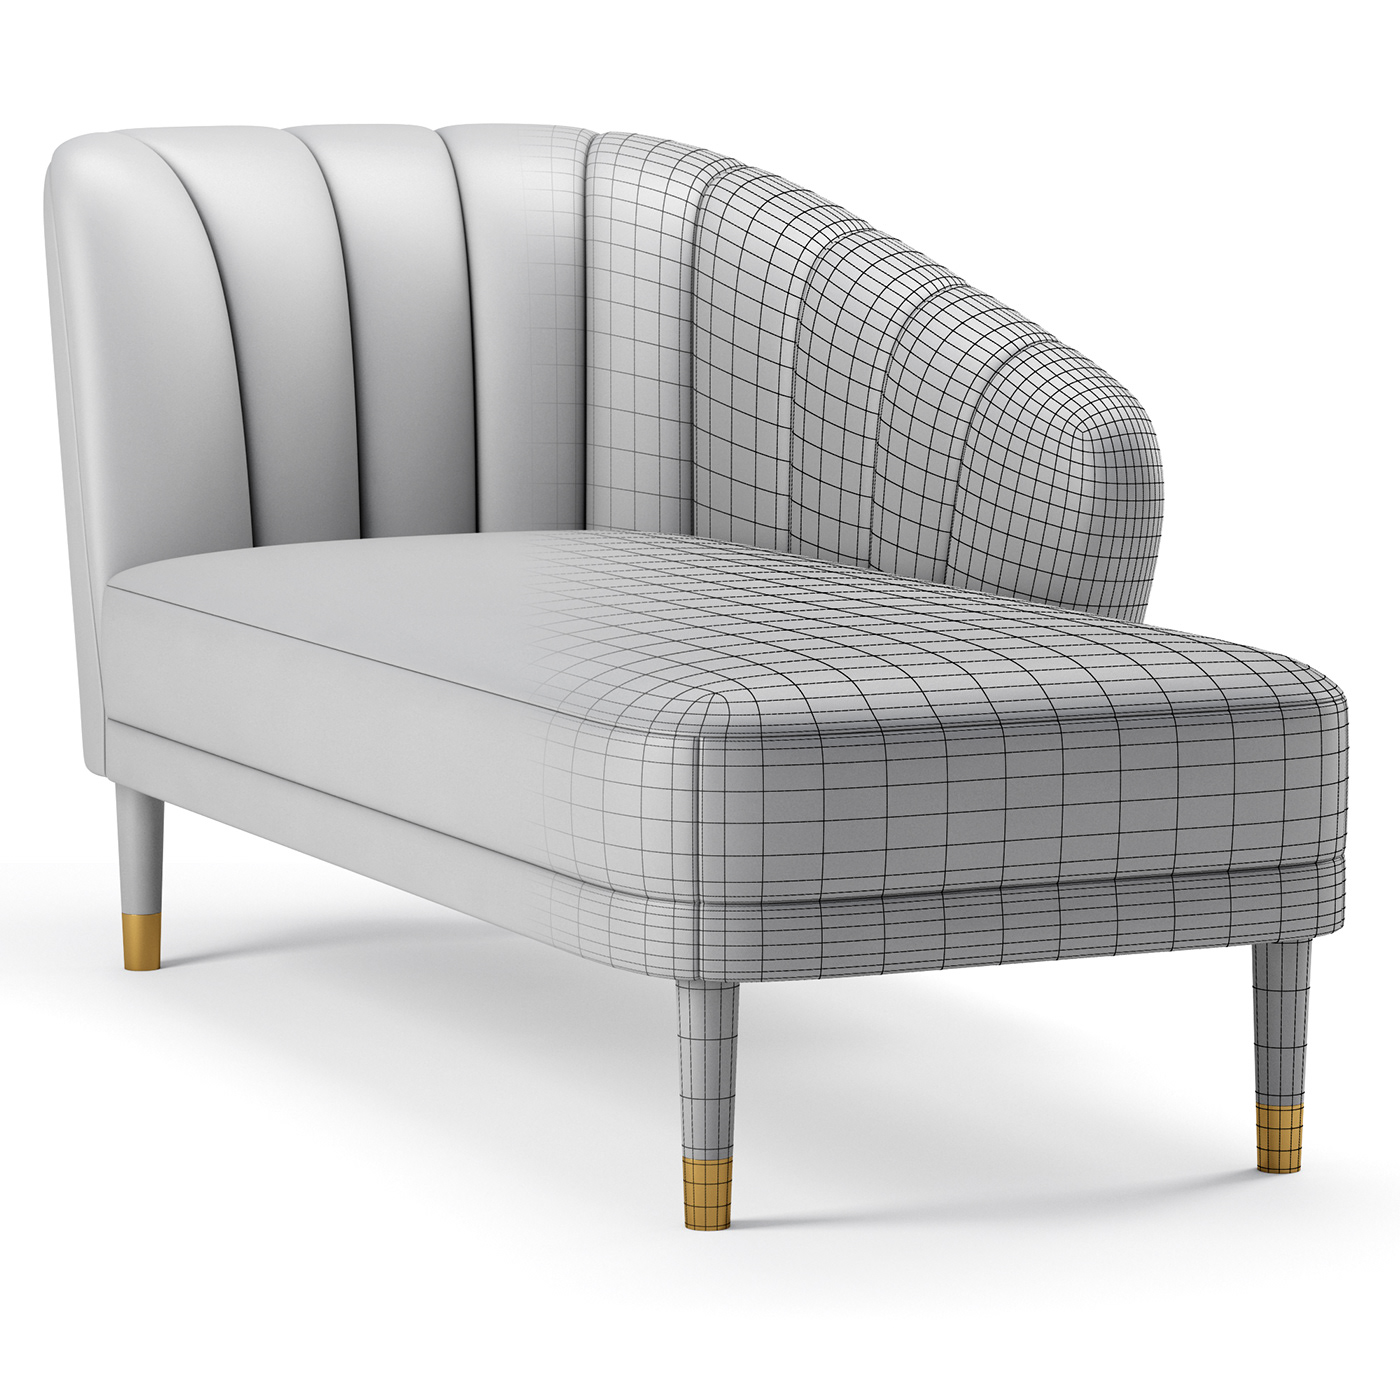 chair chaise company fabric furniture longue sofaandchair theron wood wood chair